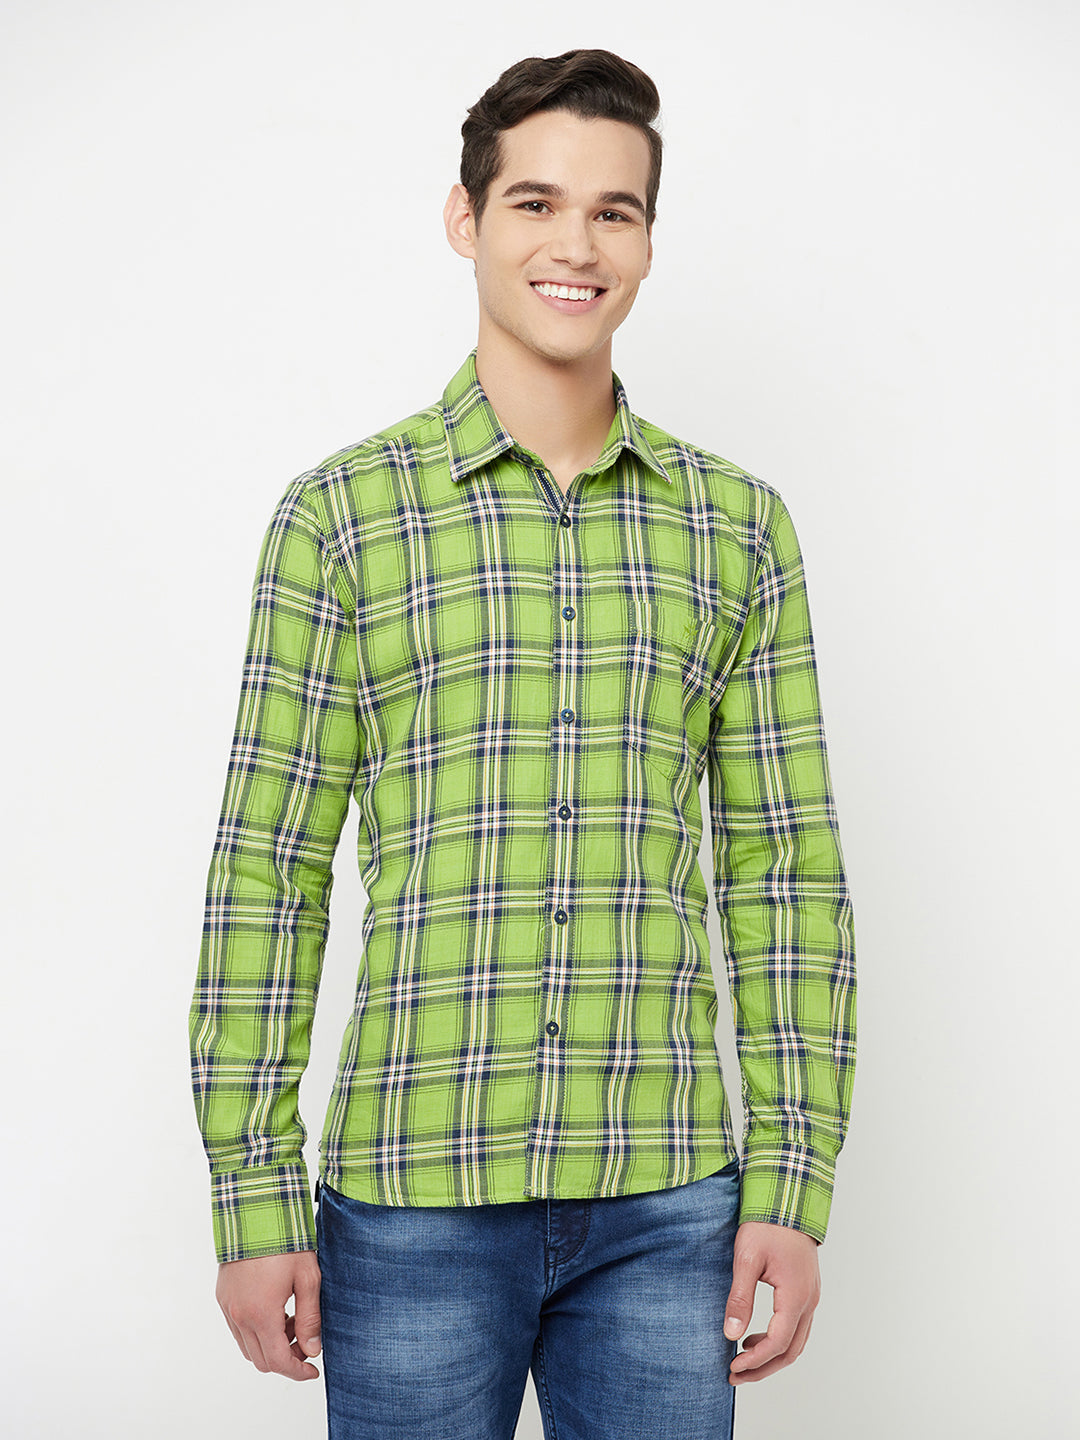 Green Checked Shirt - Men Shirts